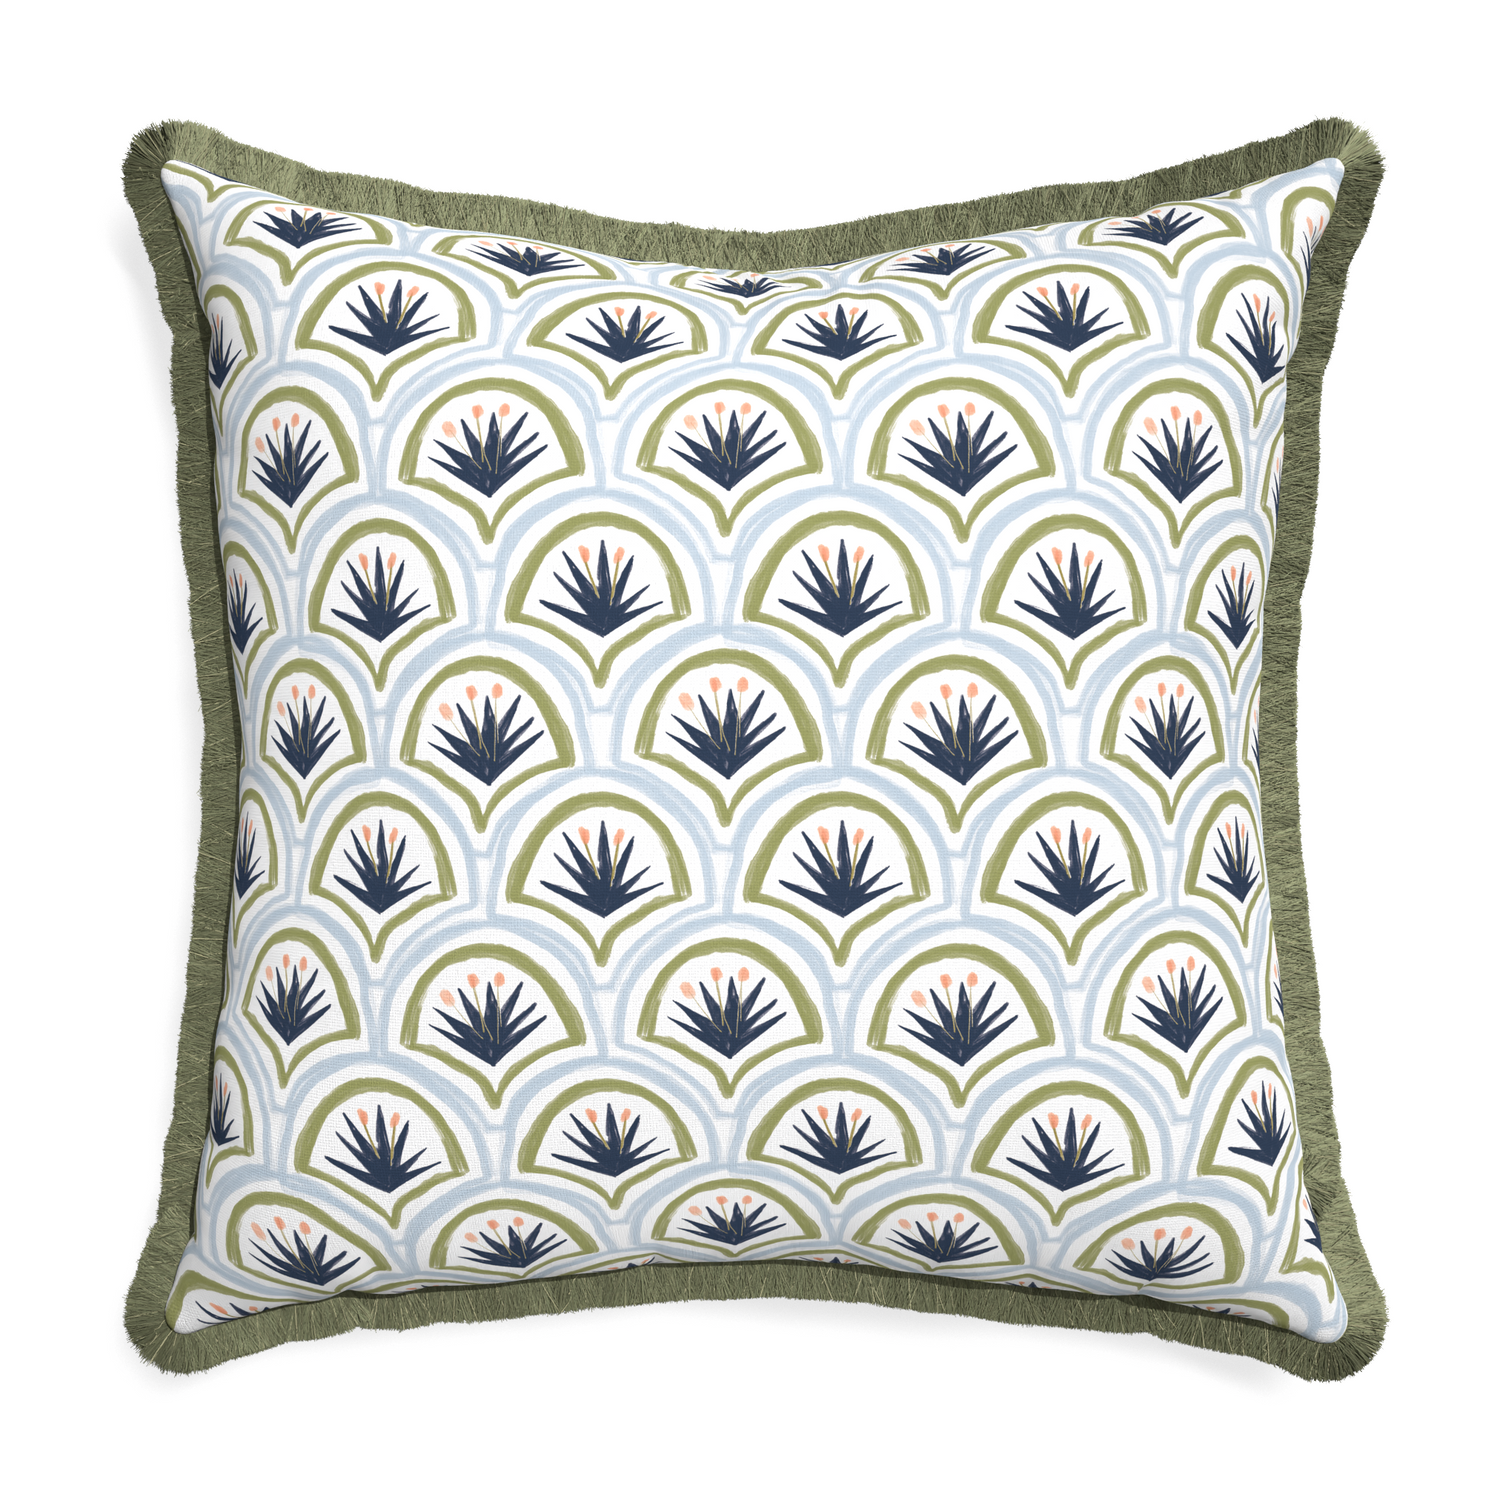 Euro-sham thatcher midnight custom art deco palm patternpillow with sage fringe on white background